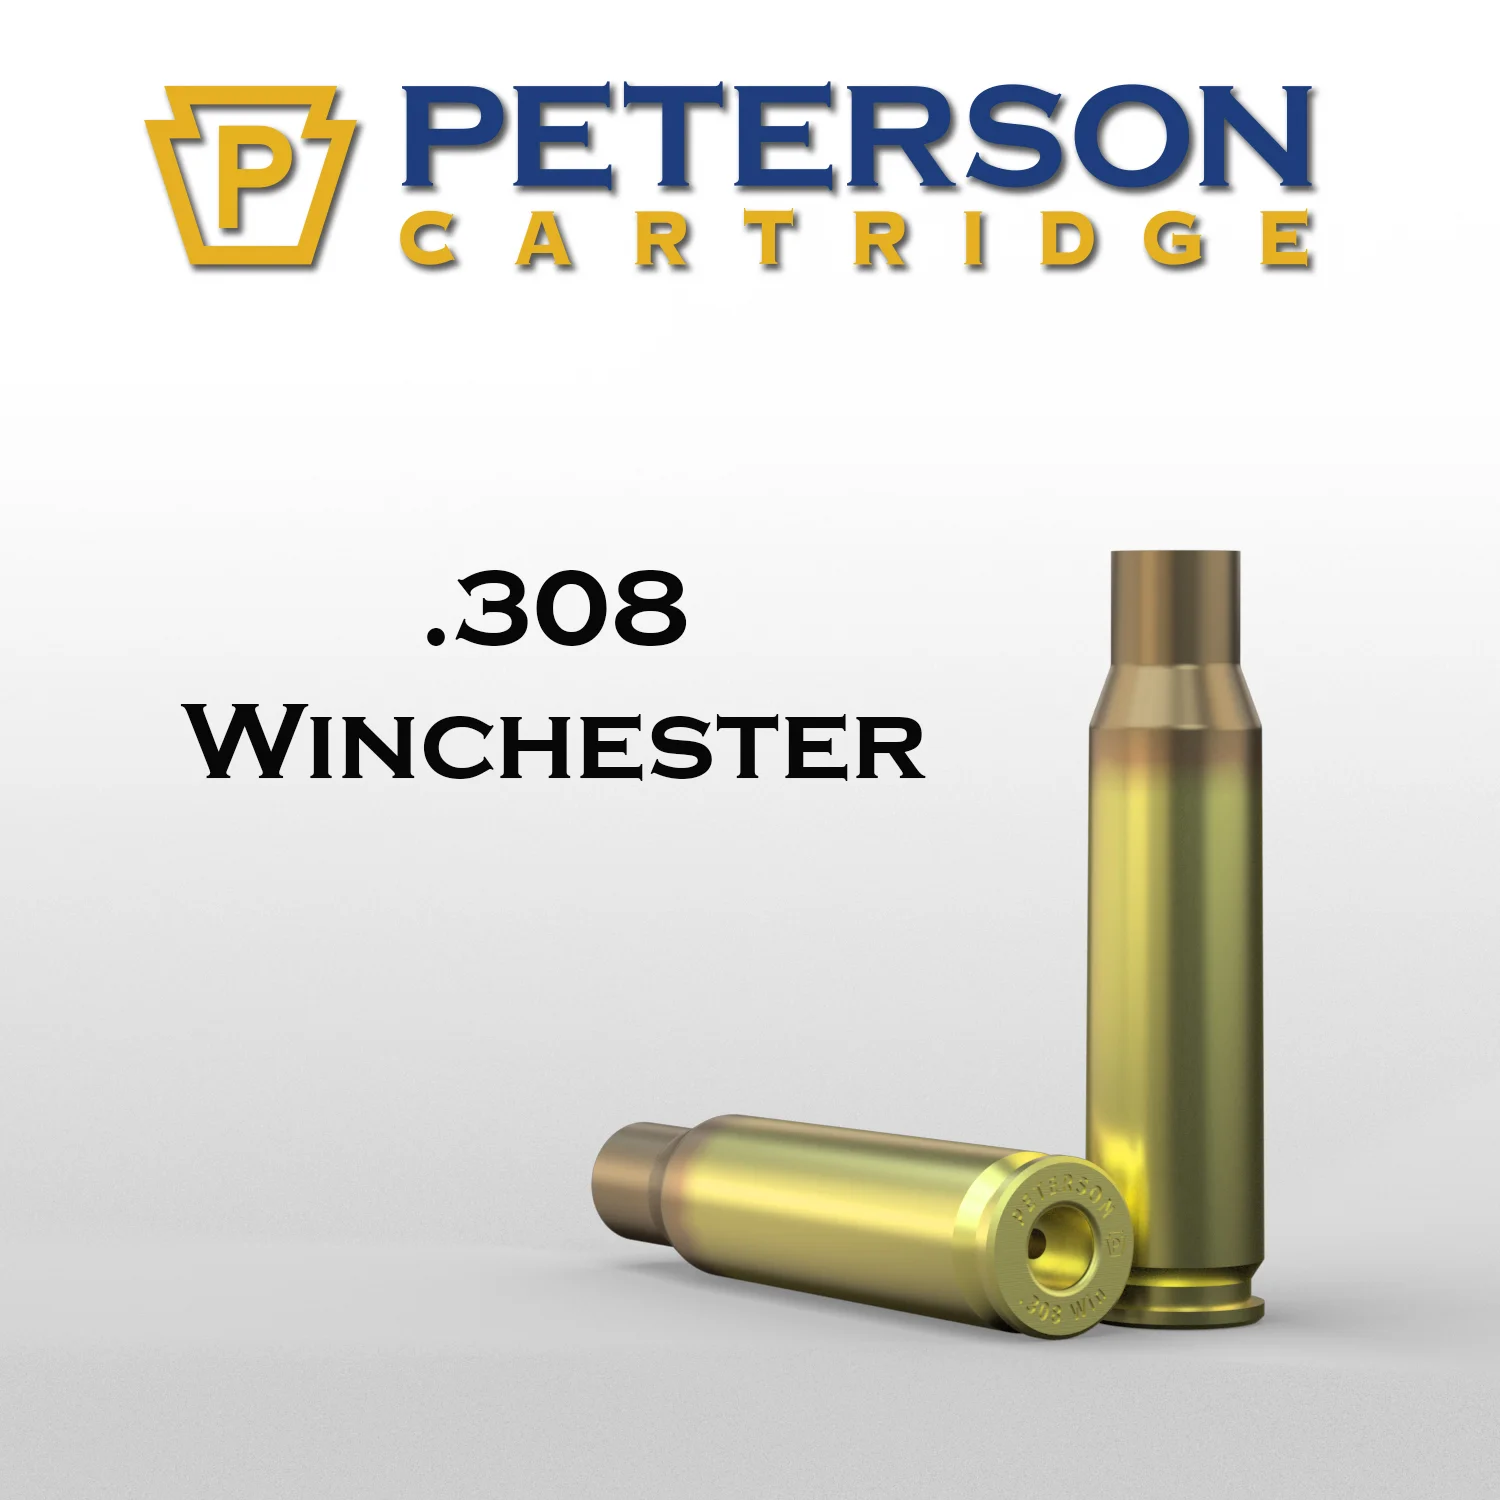 Peterson Cartridge 308 Winchester Unprimed Brass 50ct